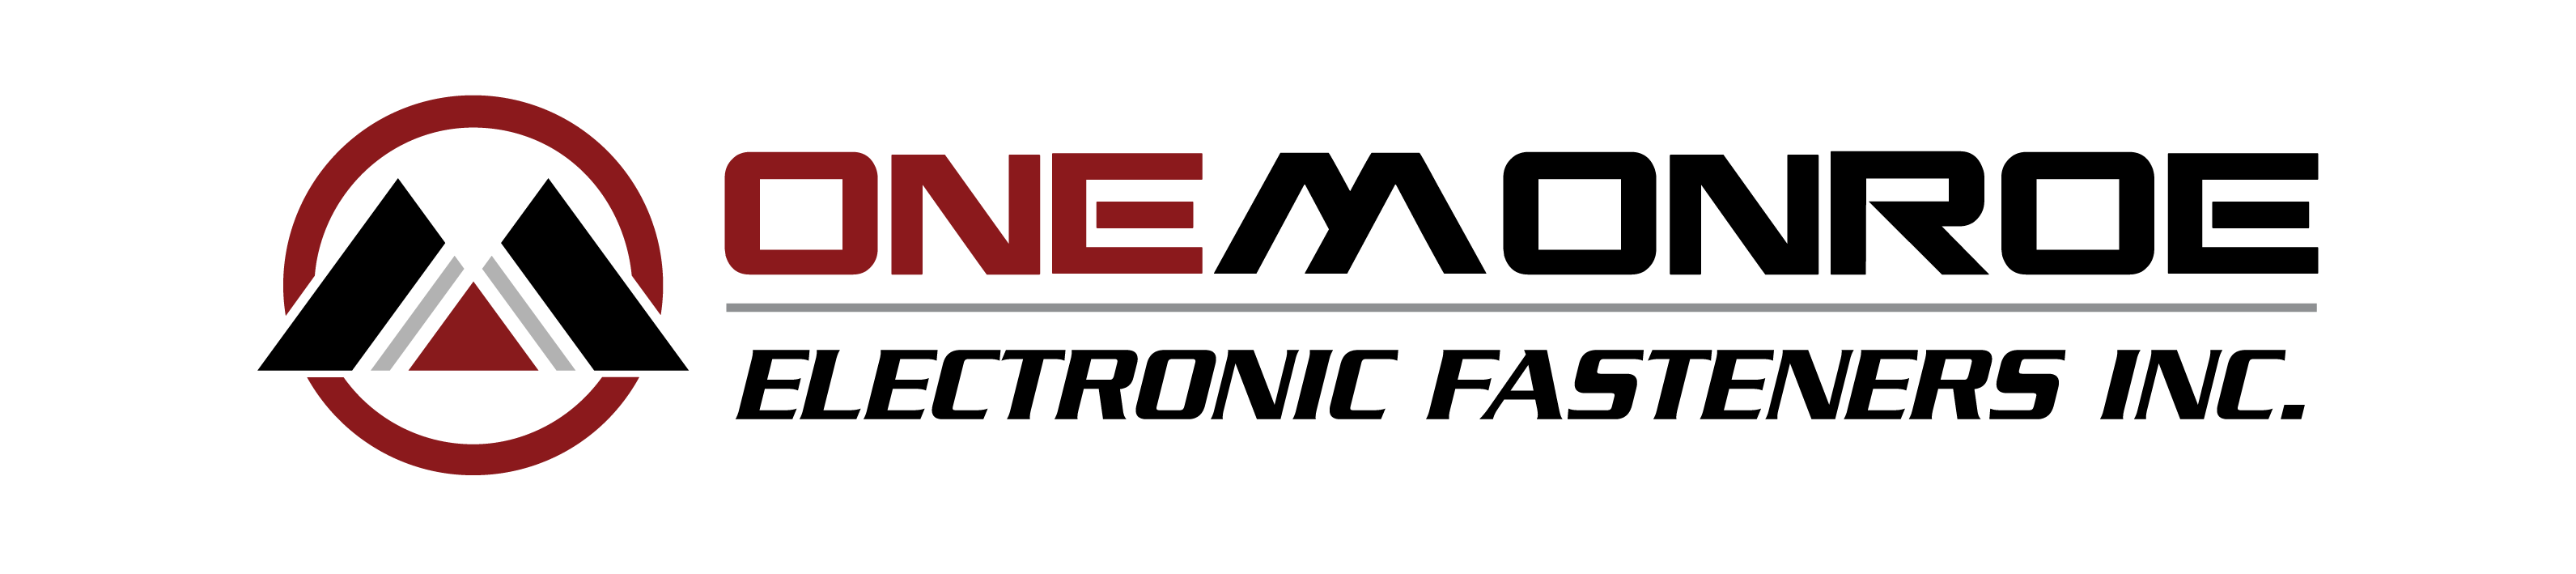 OneMonroe Electronic Fasteners Inc. (EFI) logo